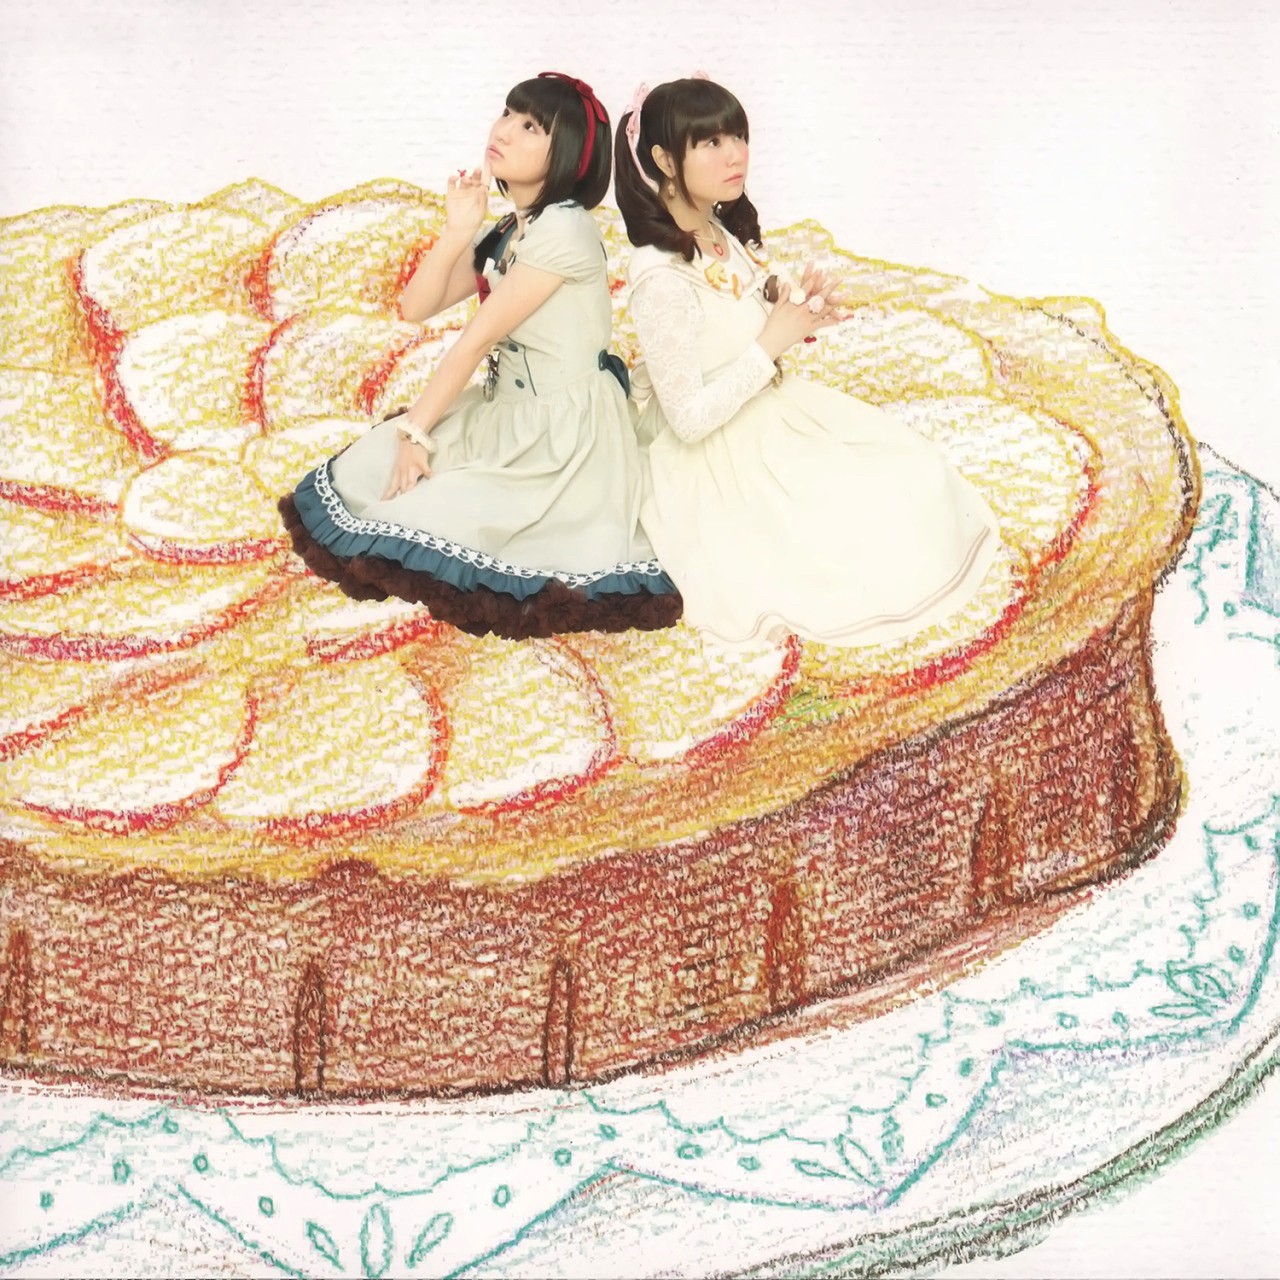 asian artwork cakes women dress Wallpaper